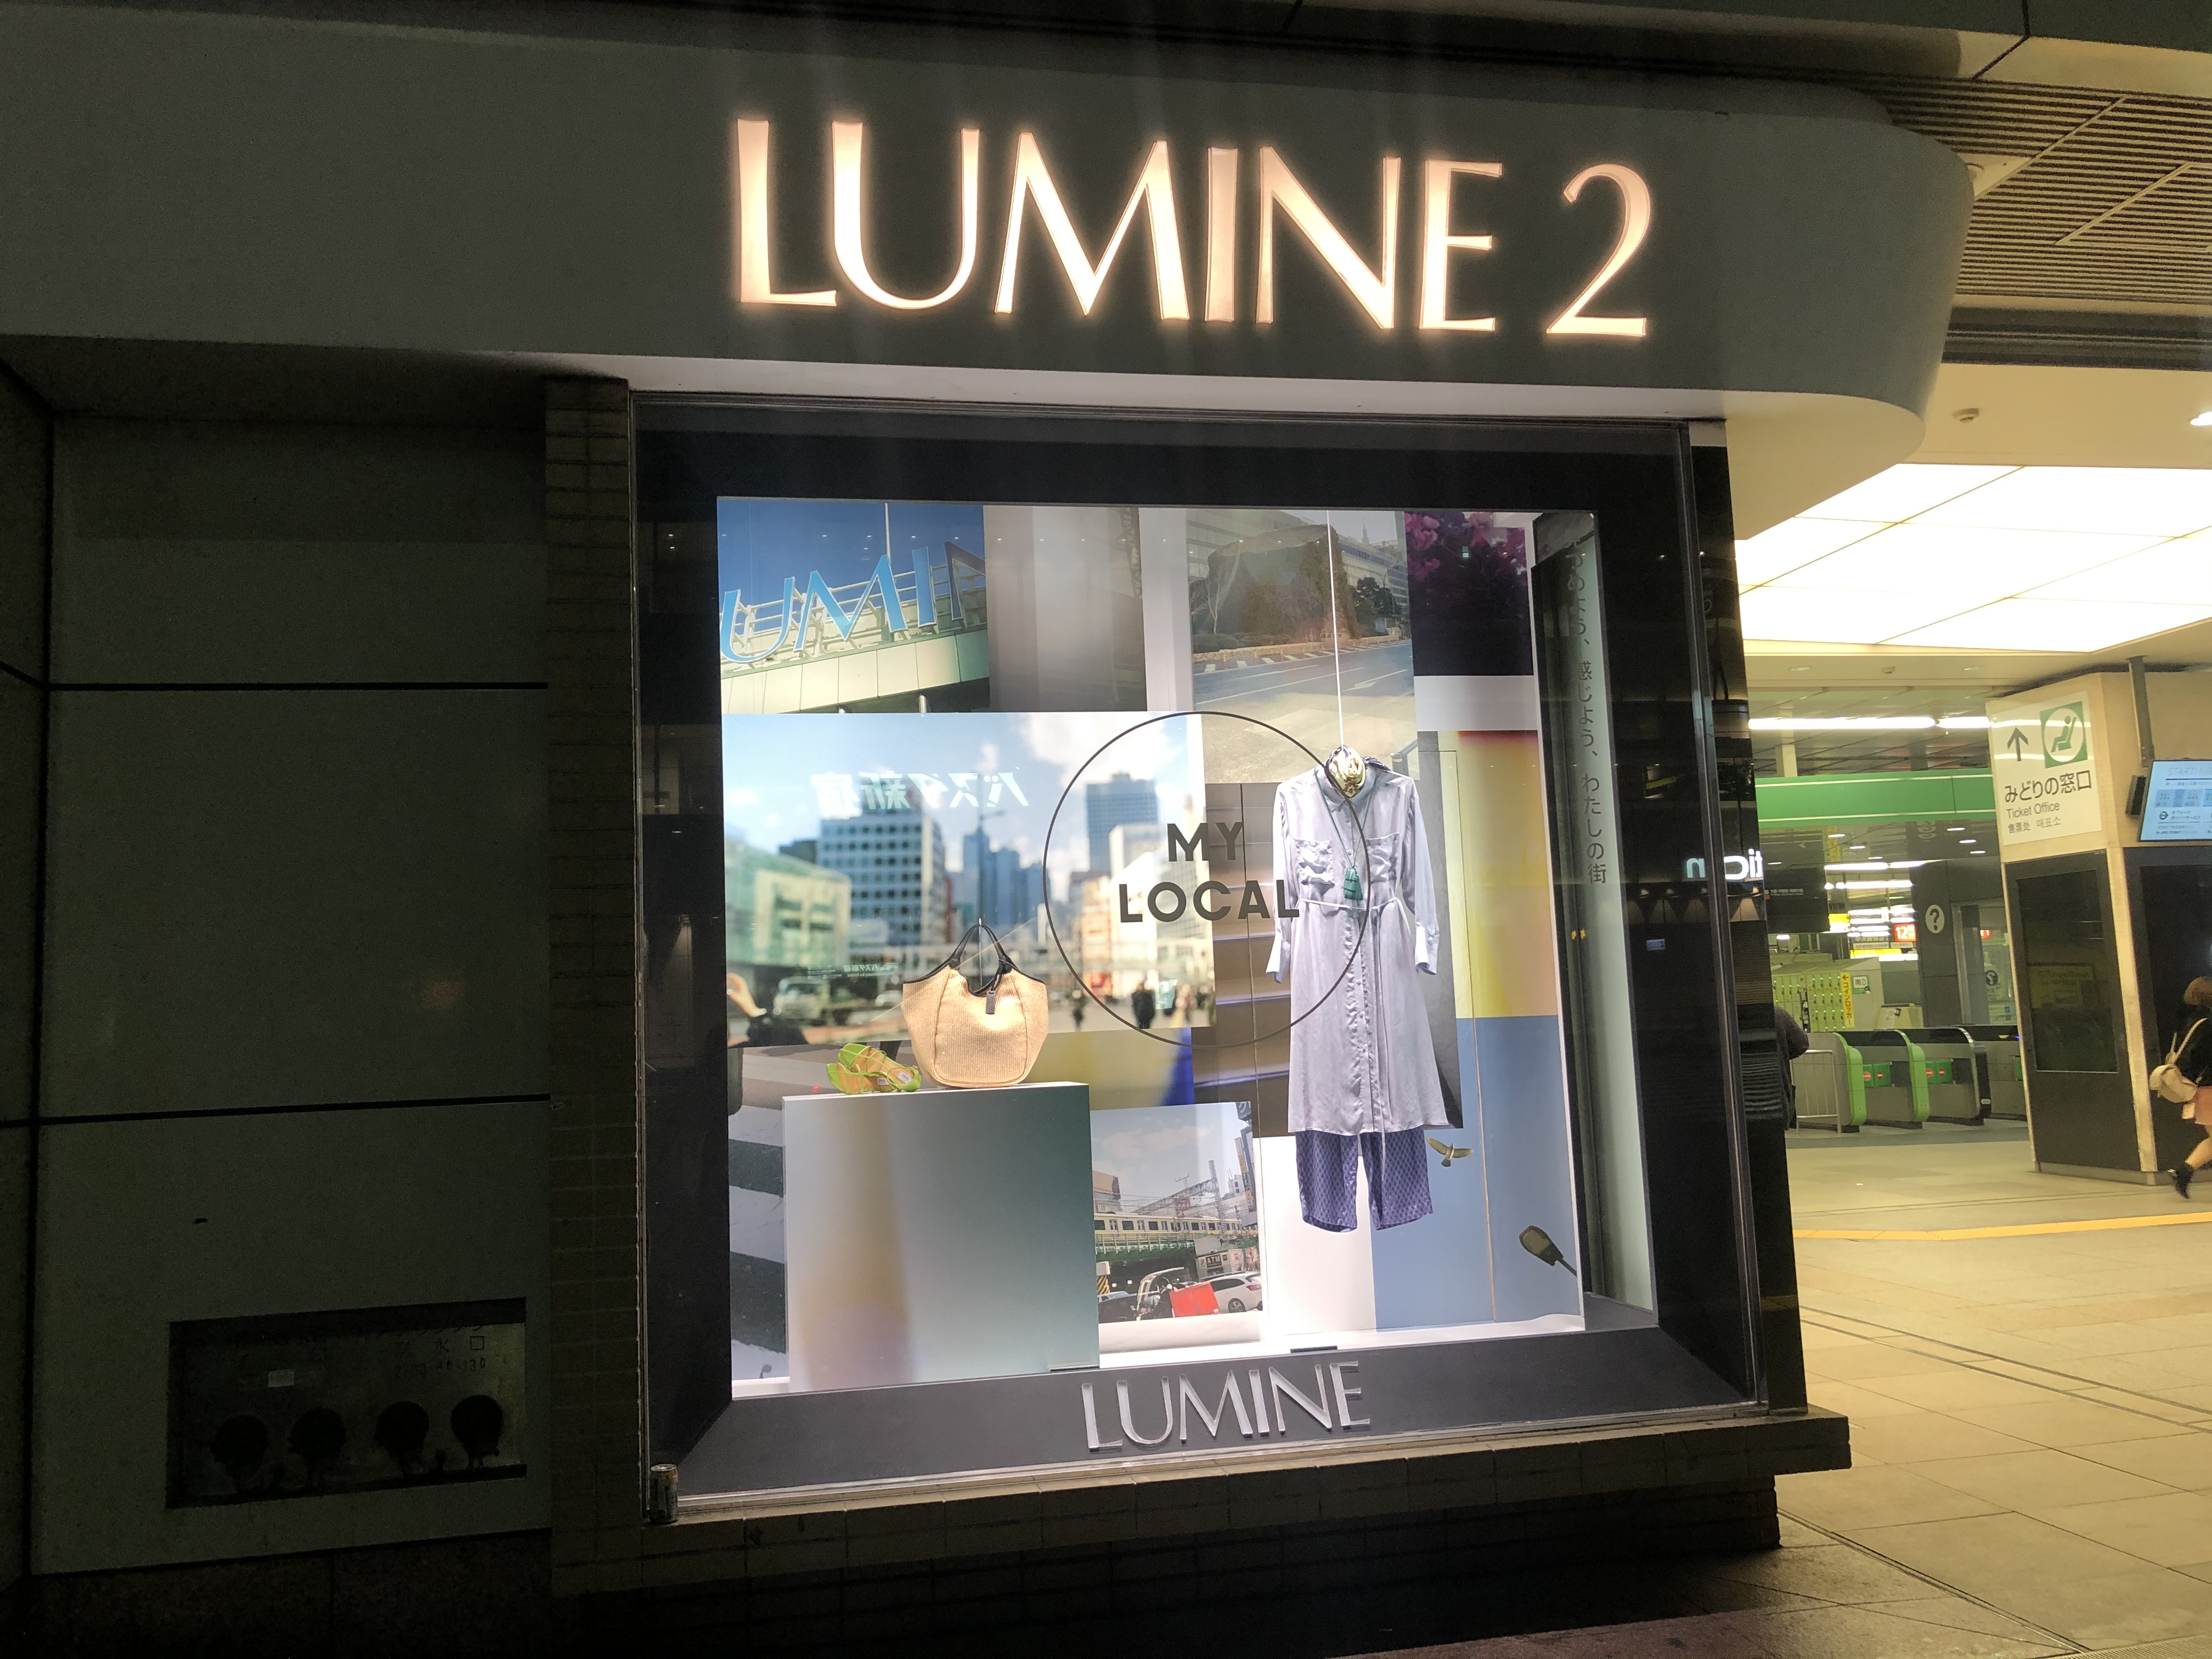 LUMINE “MY LOCAL”6